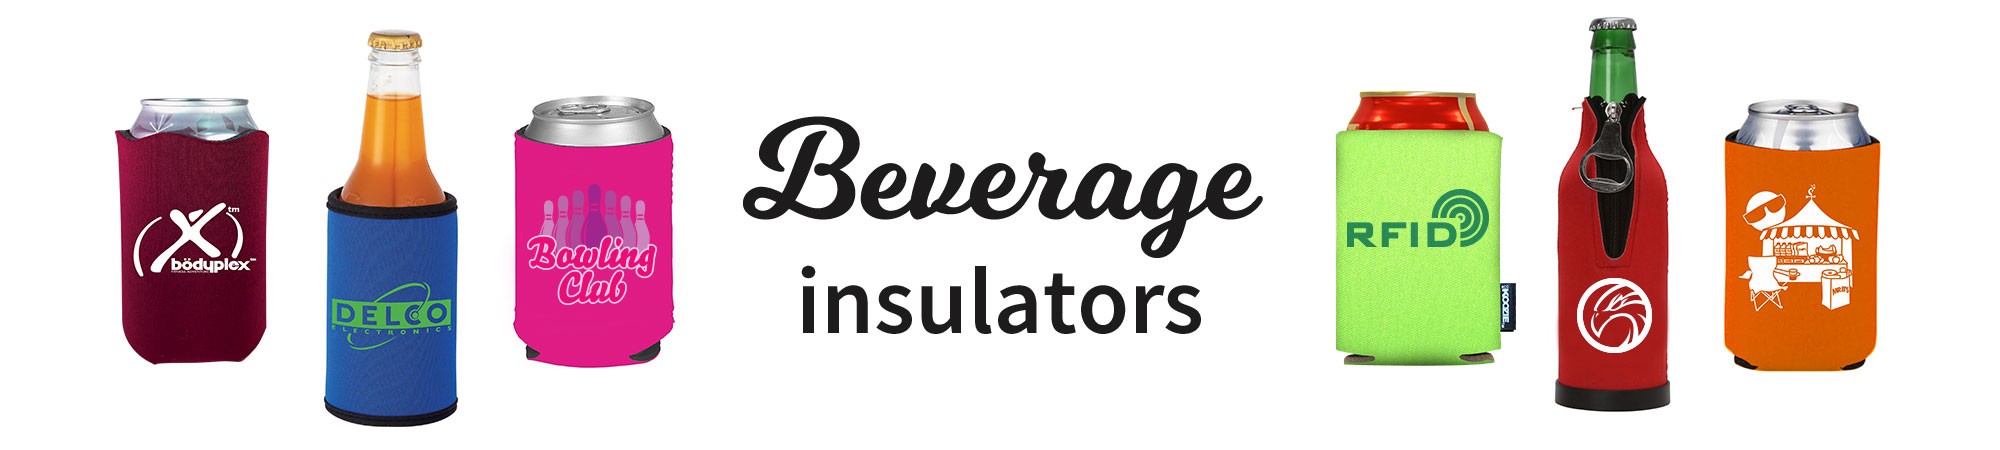 Beverage Insulators